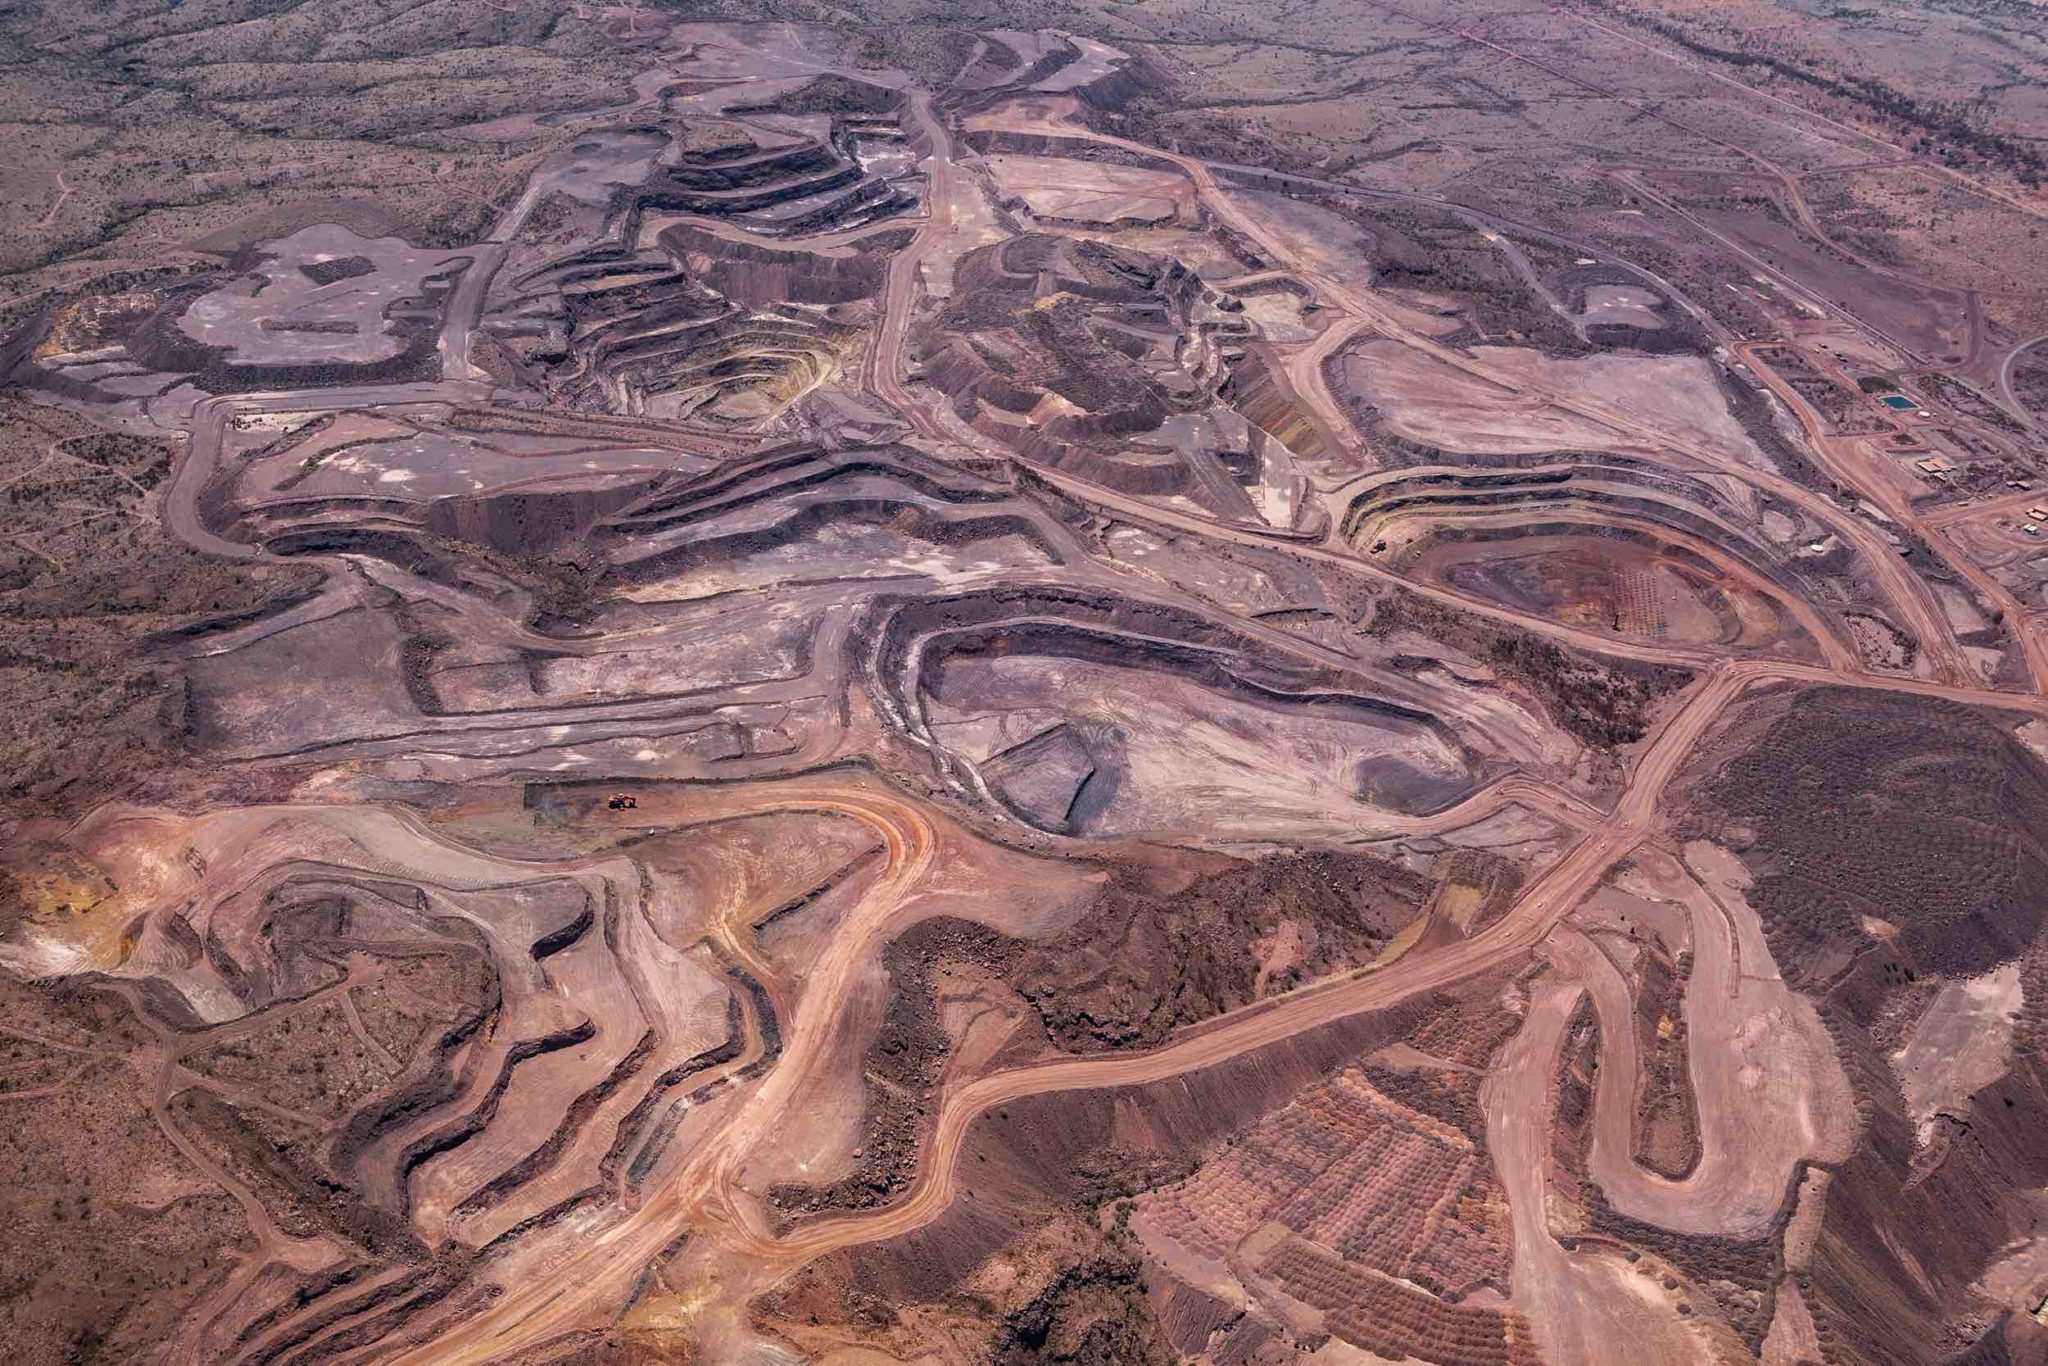 global-road-technology-metalliferous-mining-in-australia-dust-generation-grt